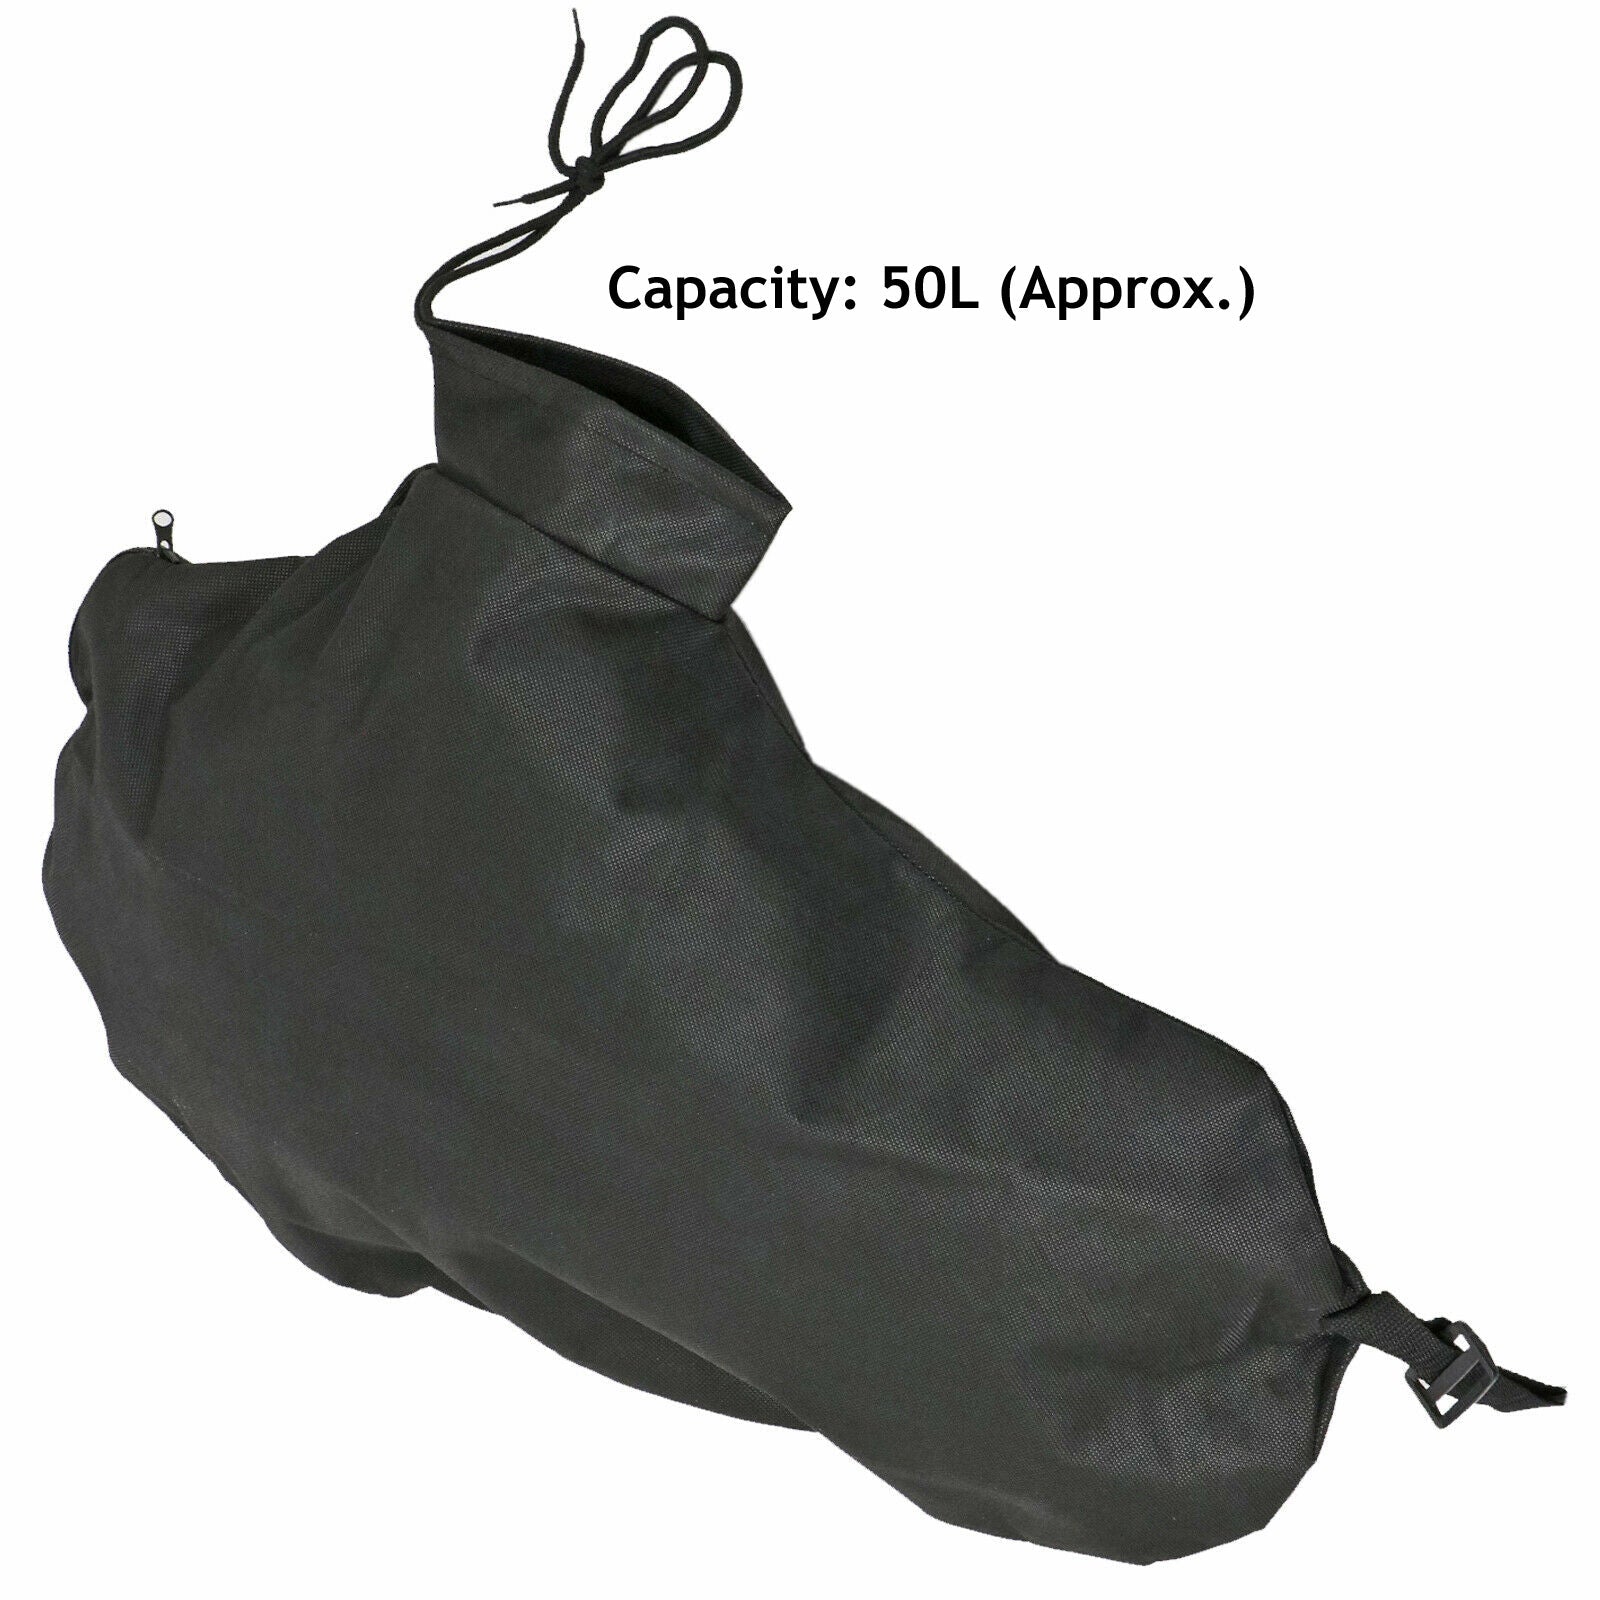 Debris Collection Bag Sack for SCREWFIX NBB441BVC Garden Vac Leaf Blower Vacuum